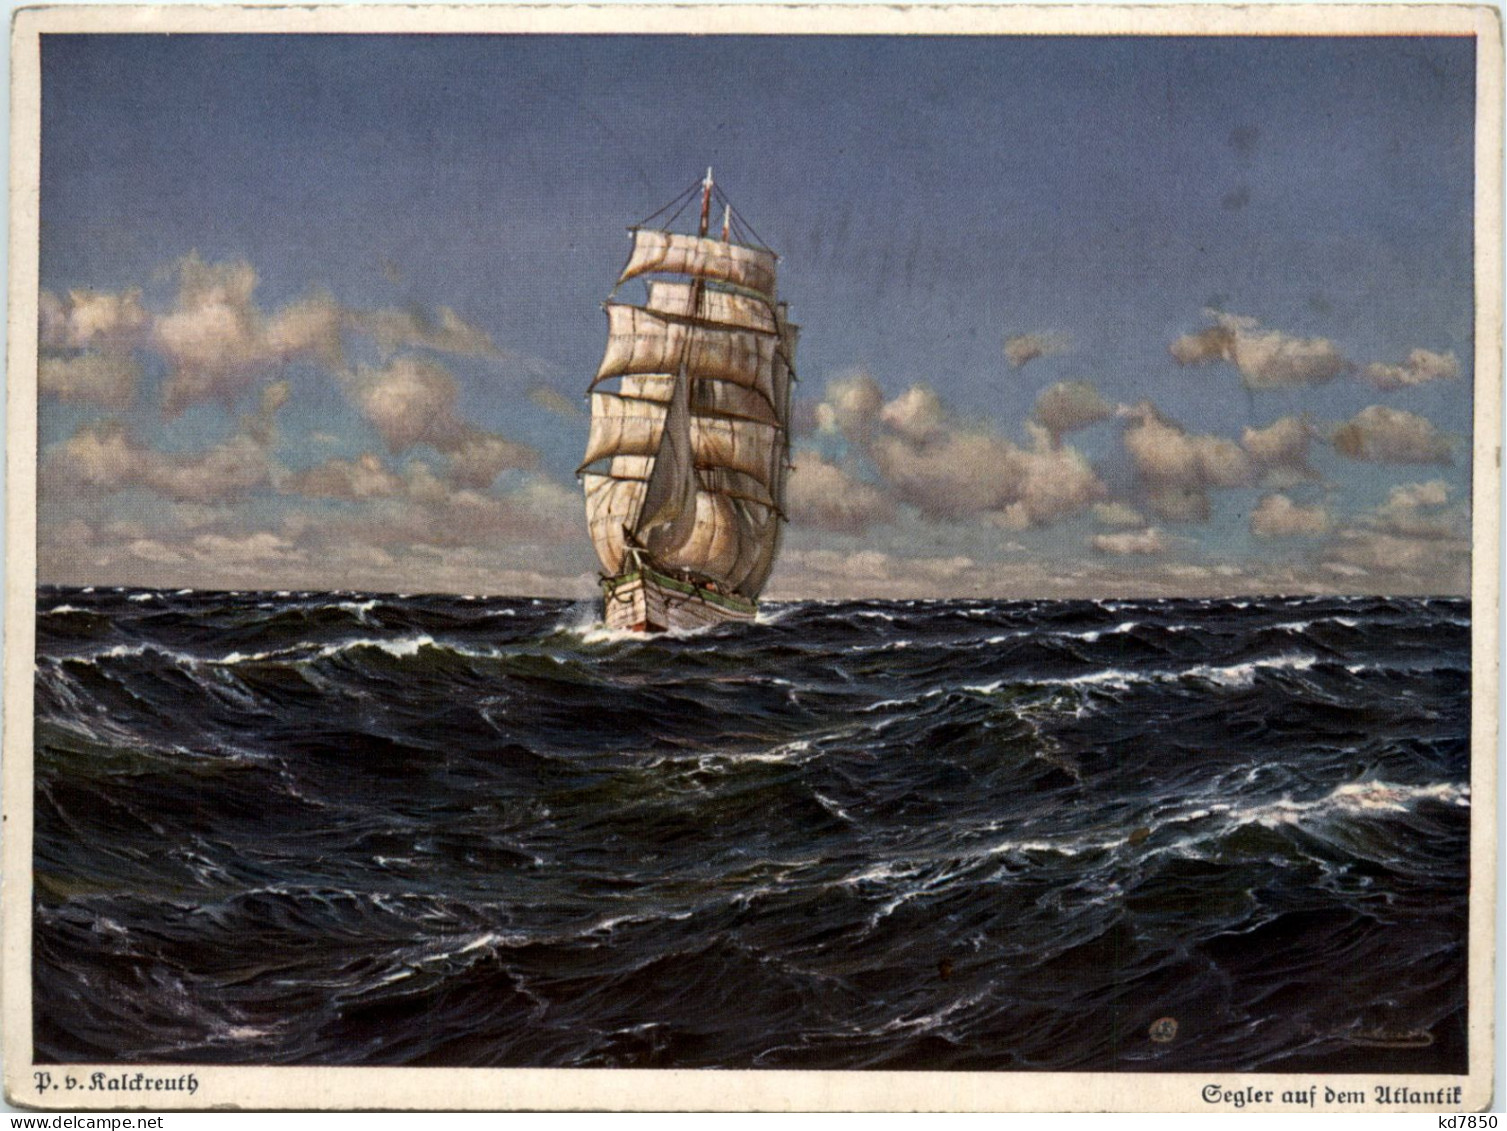 Segelschiff - Sailing Vessels